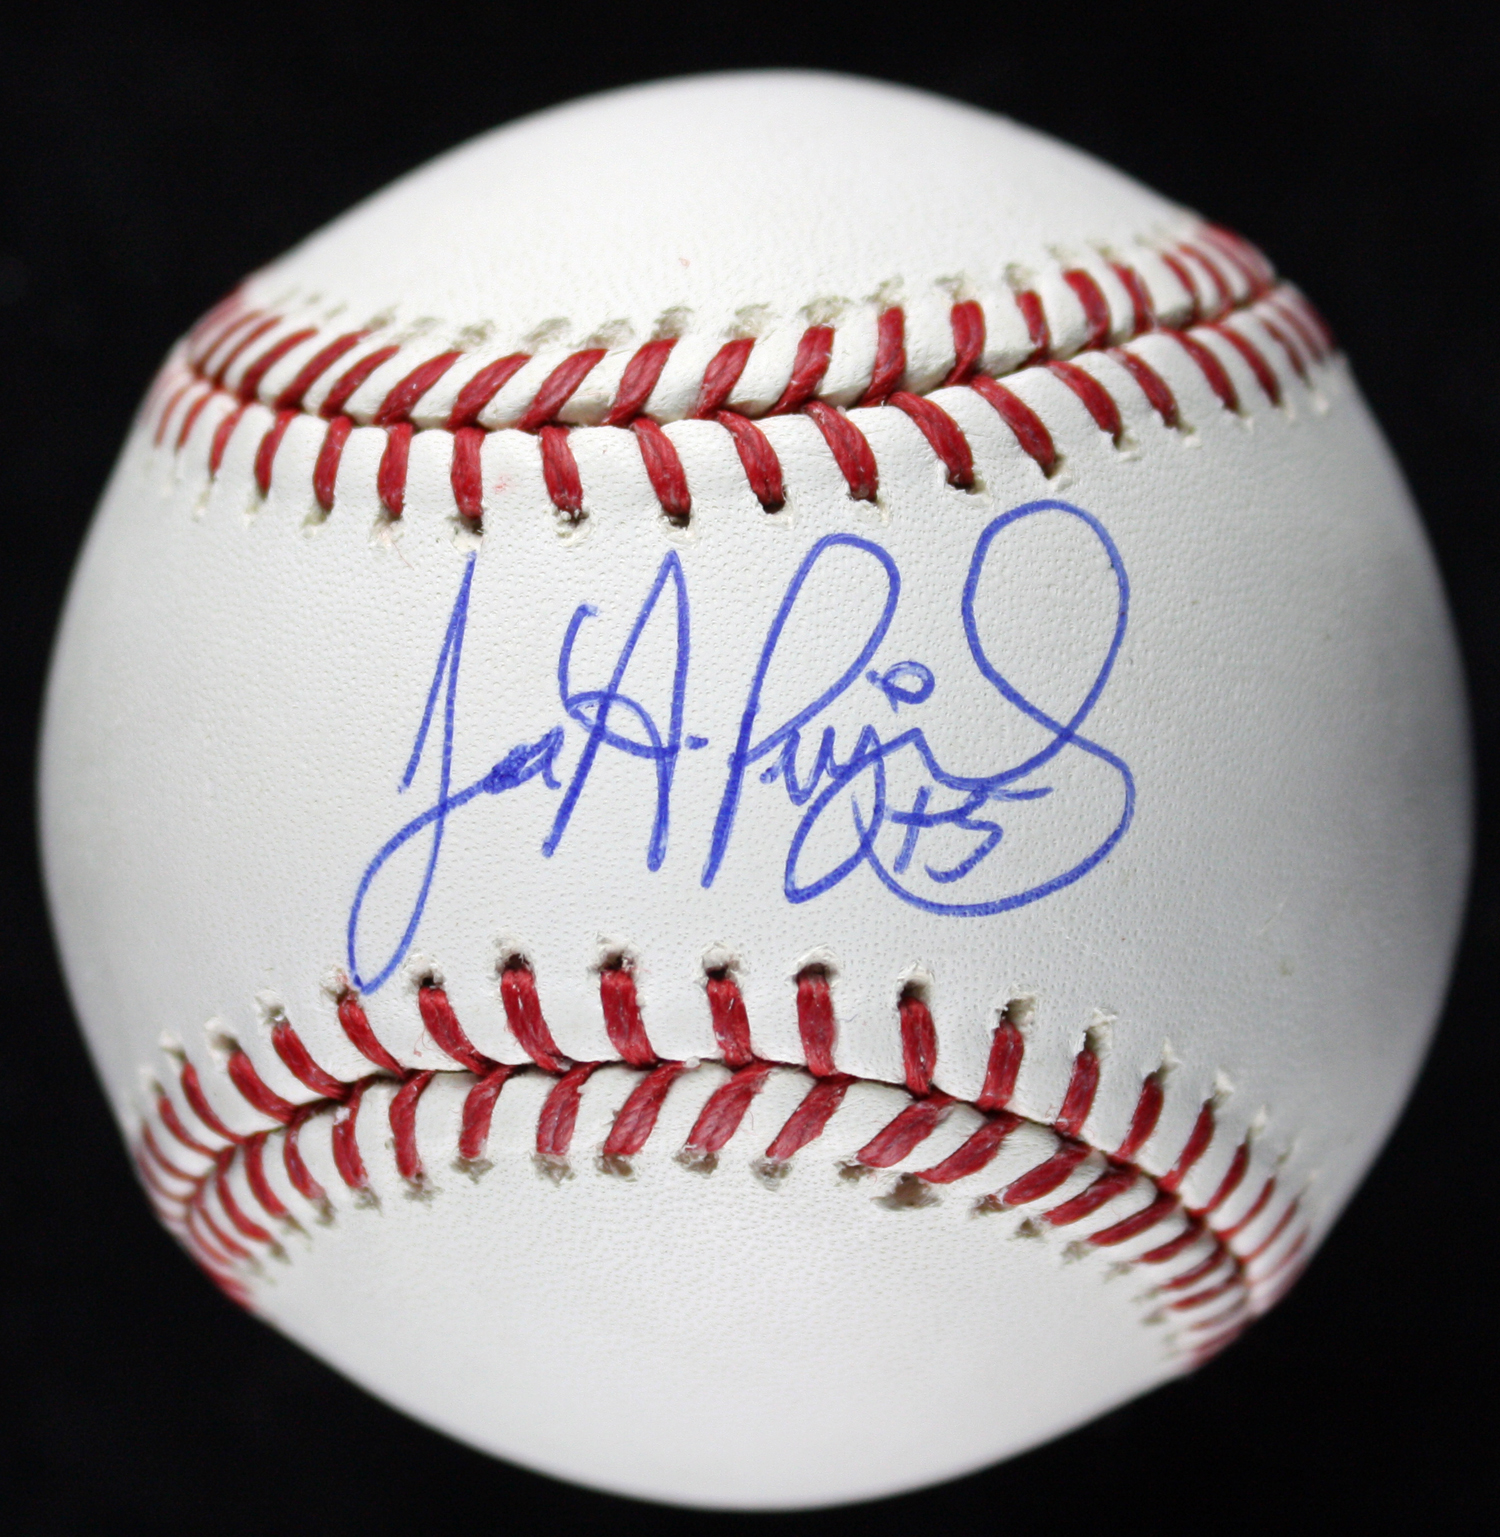 Jose Albert Pujols Signed OML Baseball (MLB & Pujols COA)